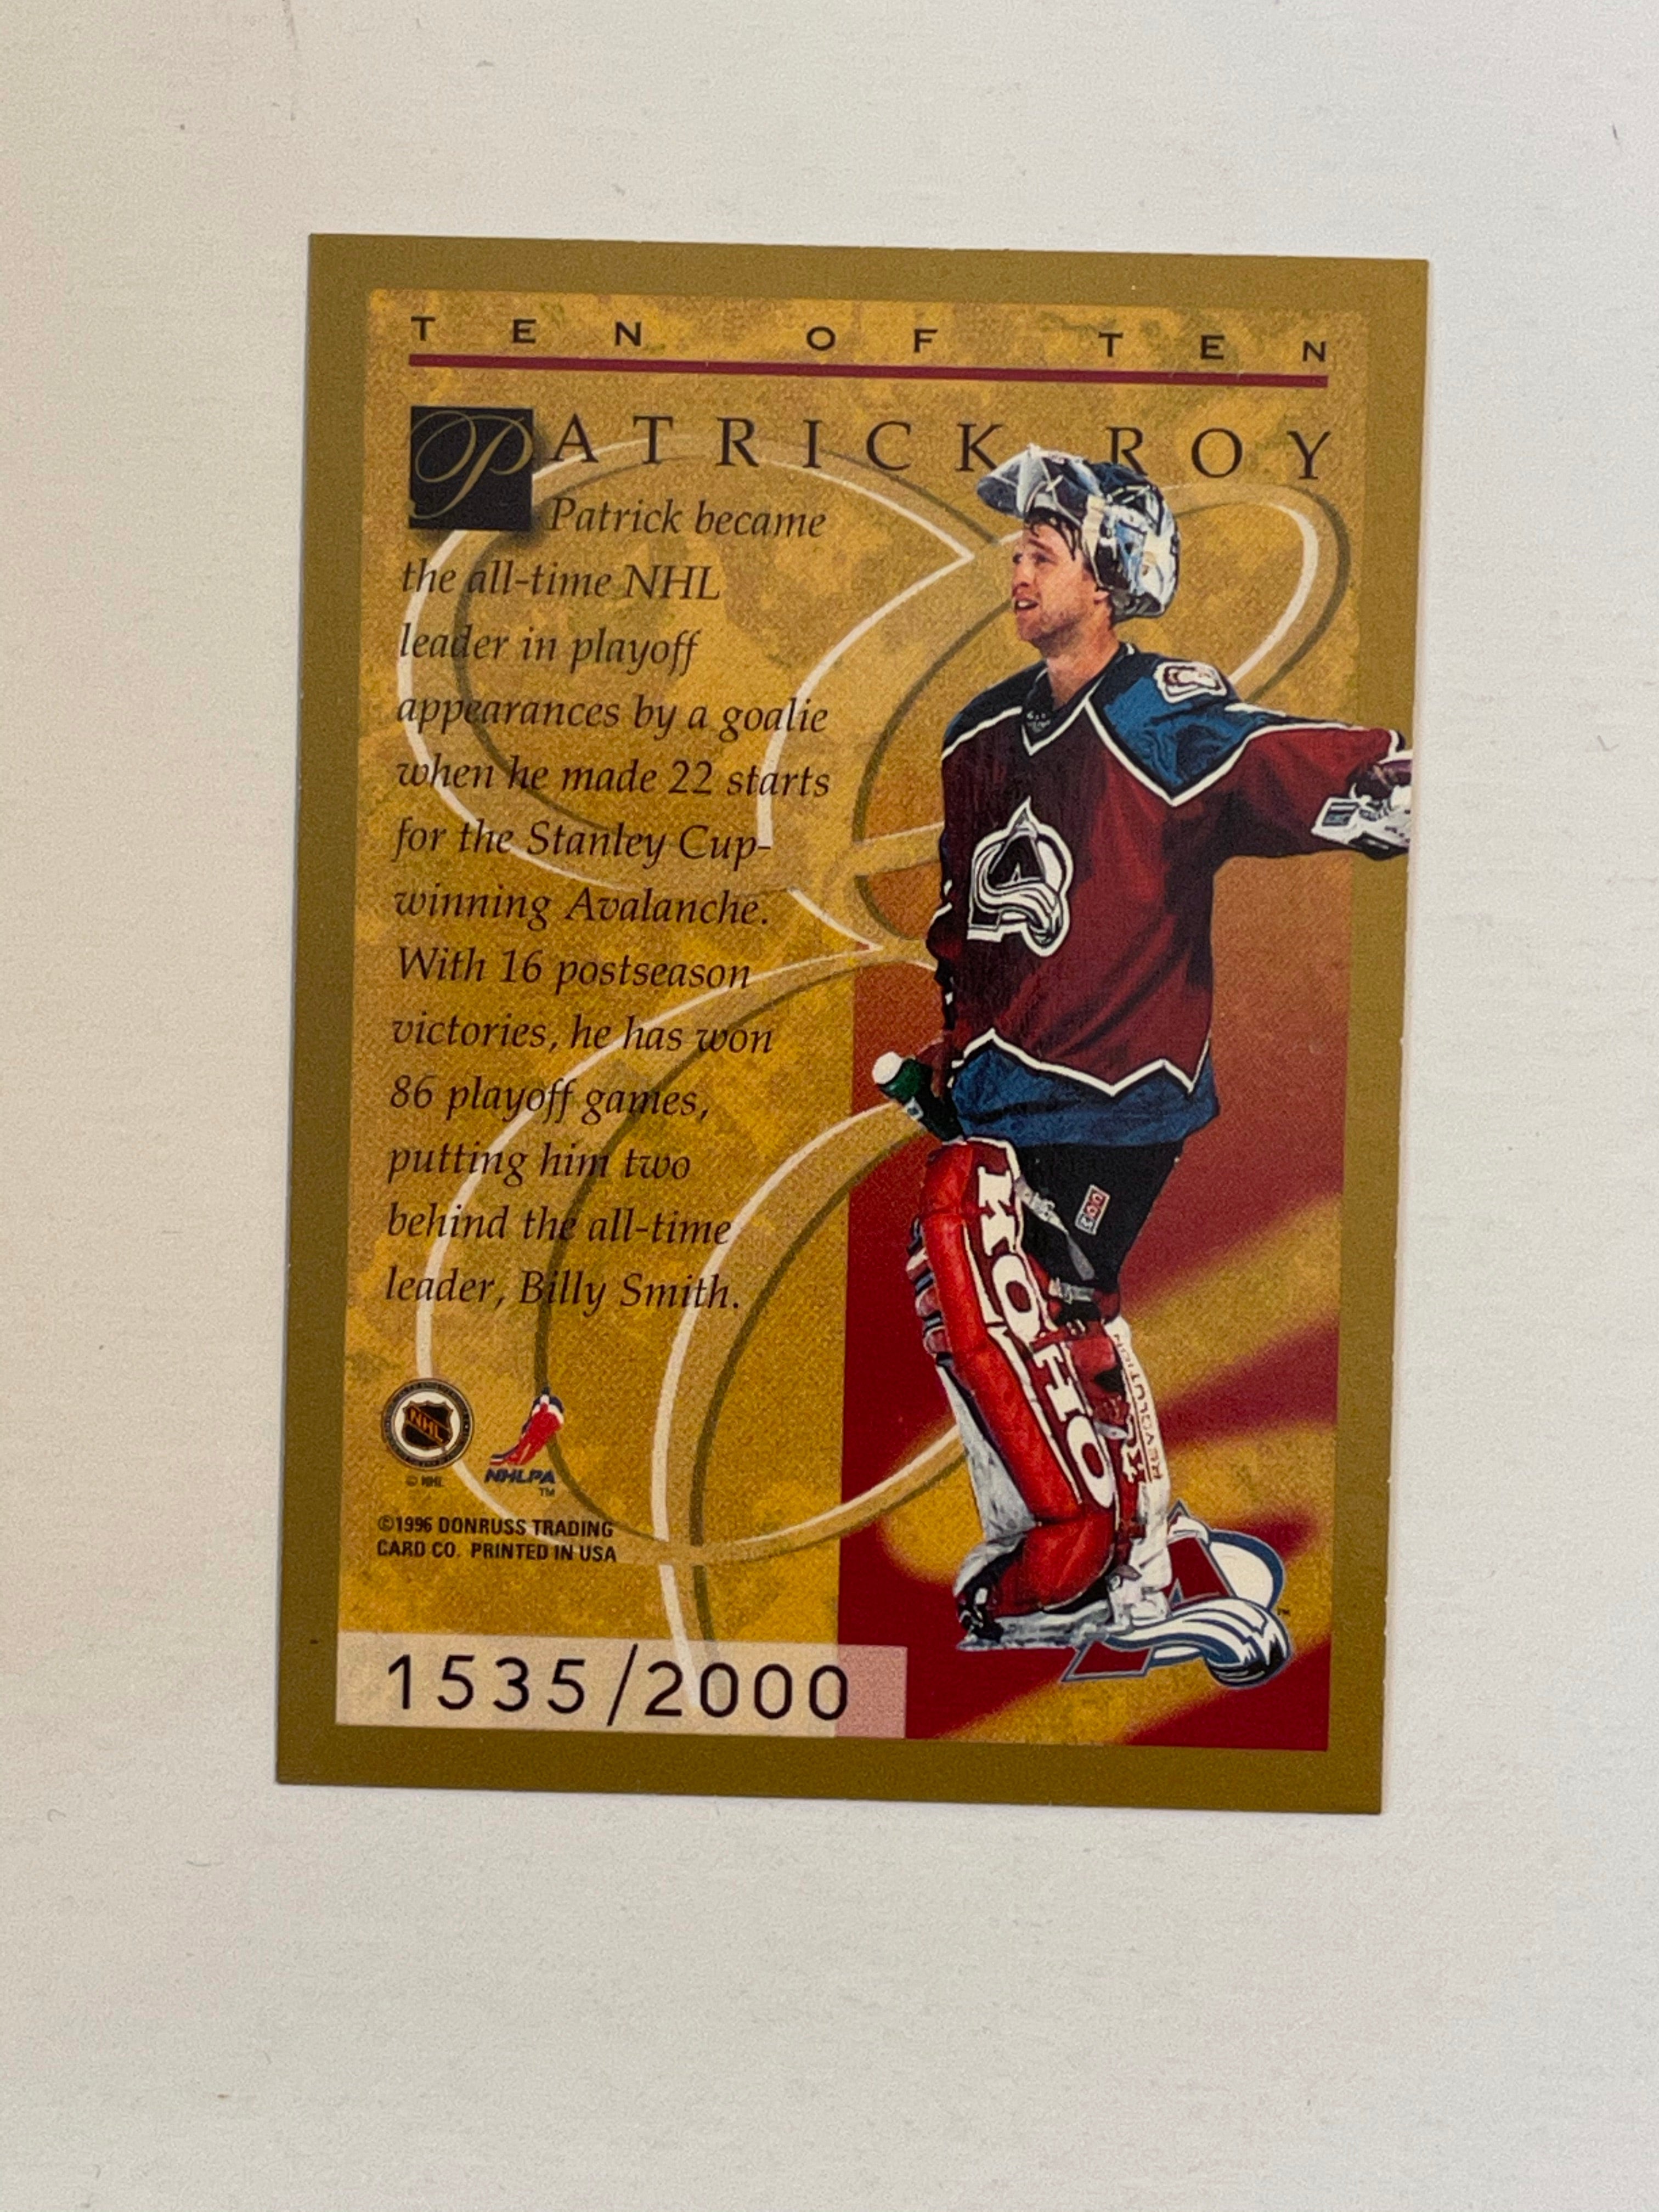 Patrick Roy Montreal Canadiens hockey rare Donruss Elite series insert card 1996